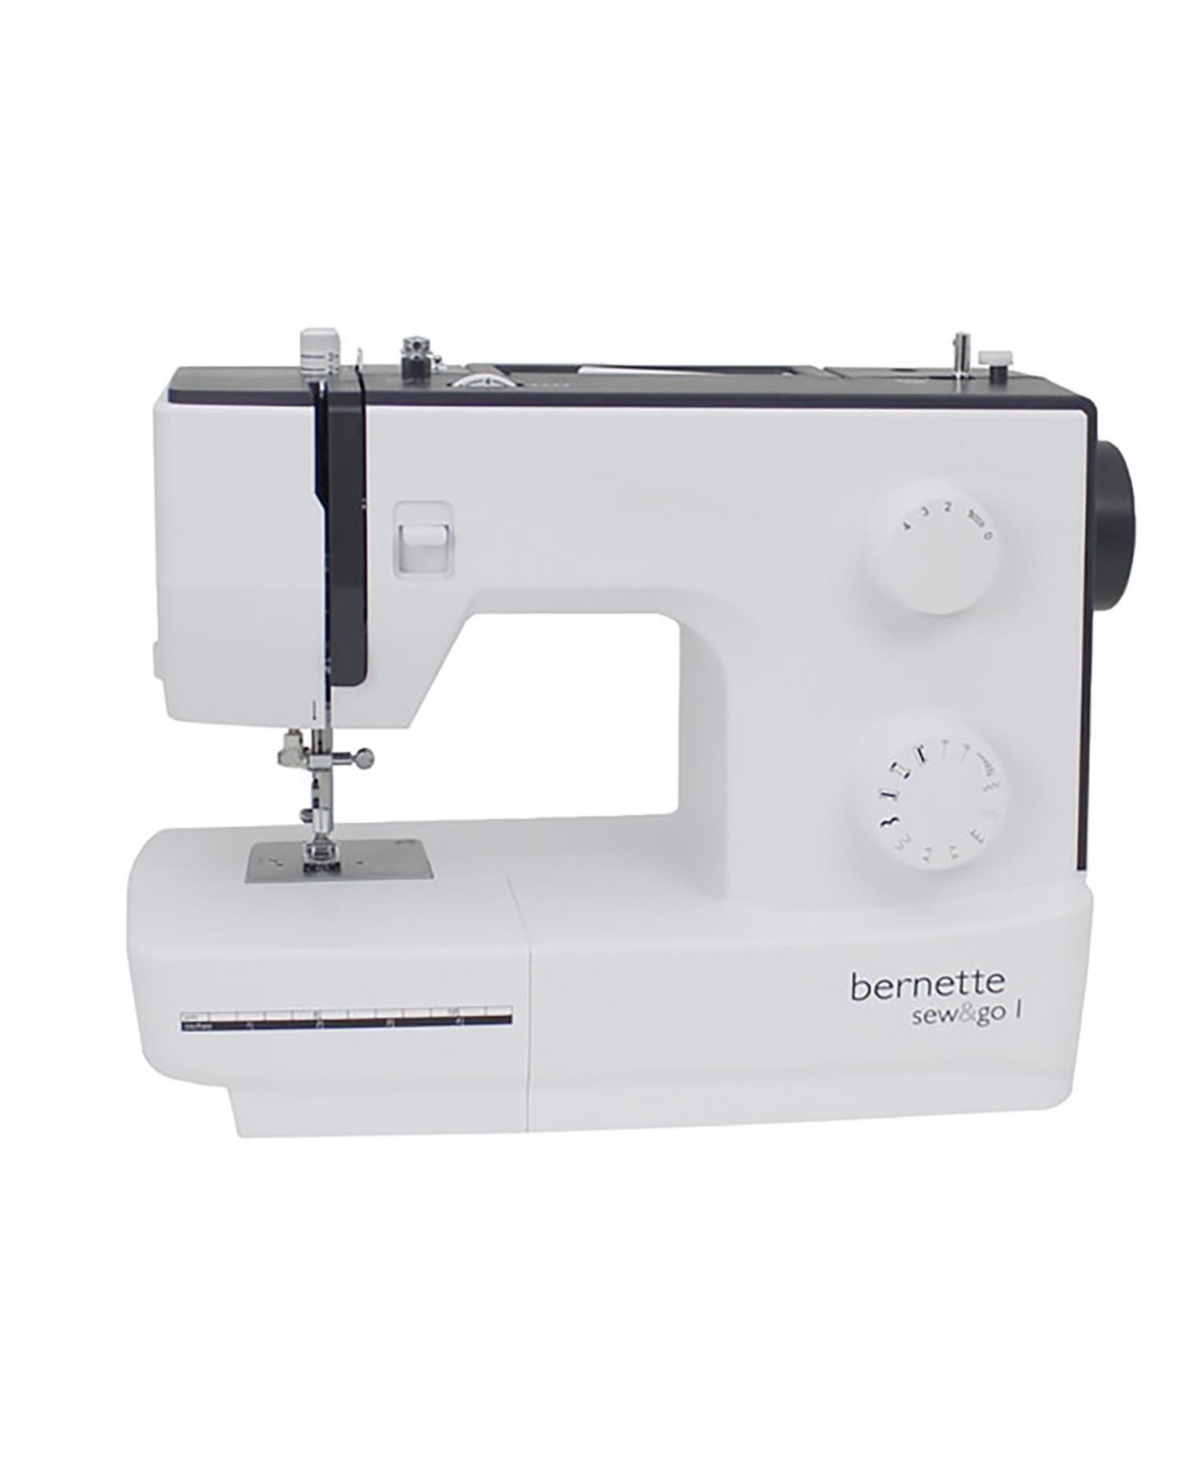 Handheld sewing machine ZDML-2 - Michley Tivax